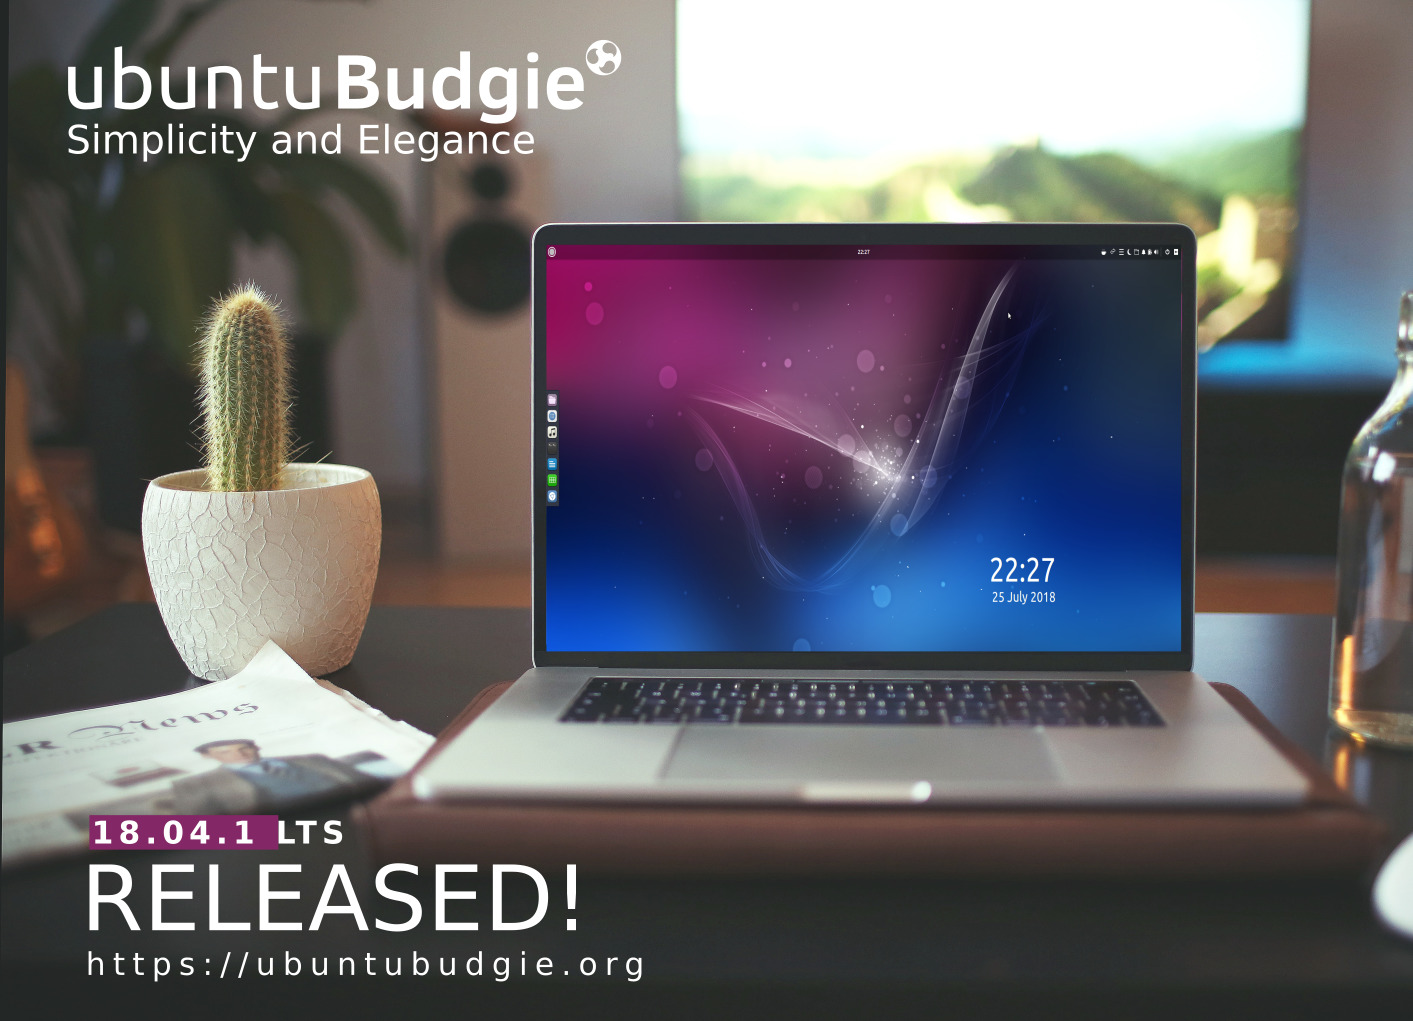 Ubuntu Budgie 18.04.1 LTS Released!